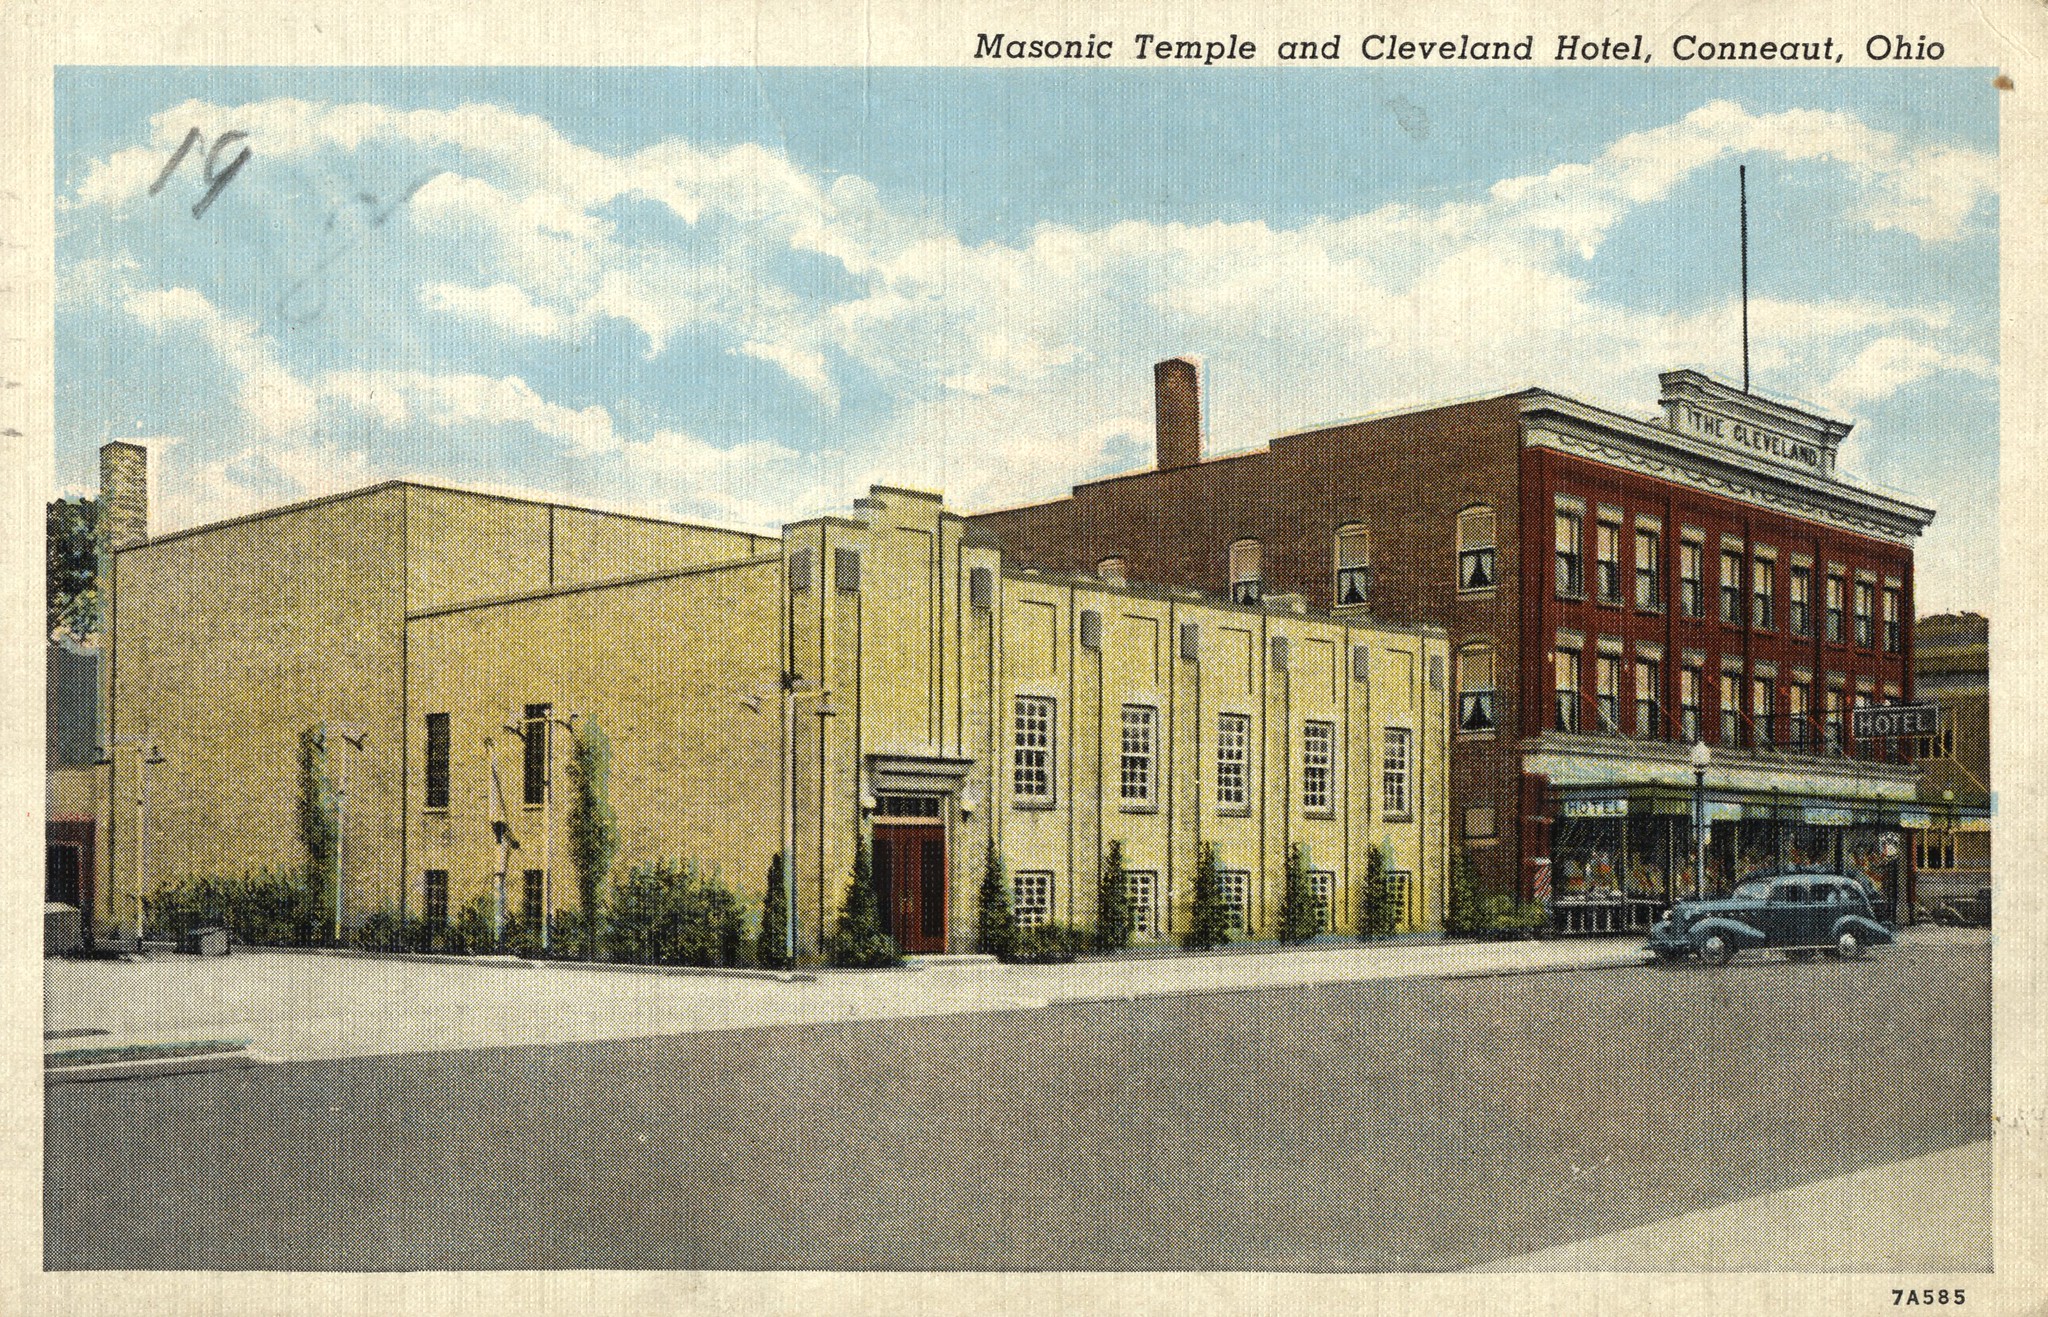 Cleveland Hotel and Masonic Temple - Conneaut, Ohio